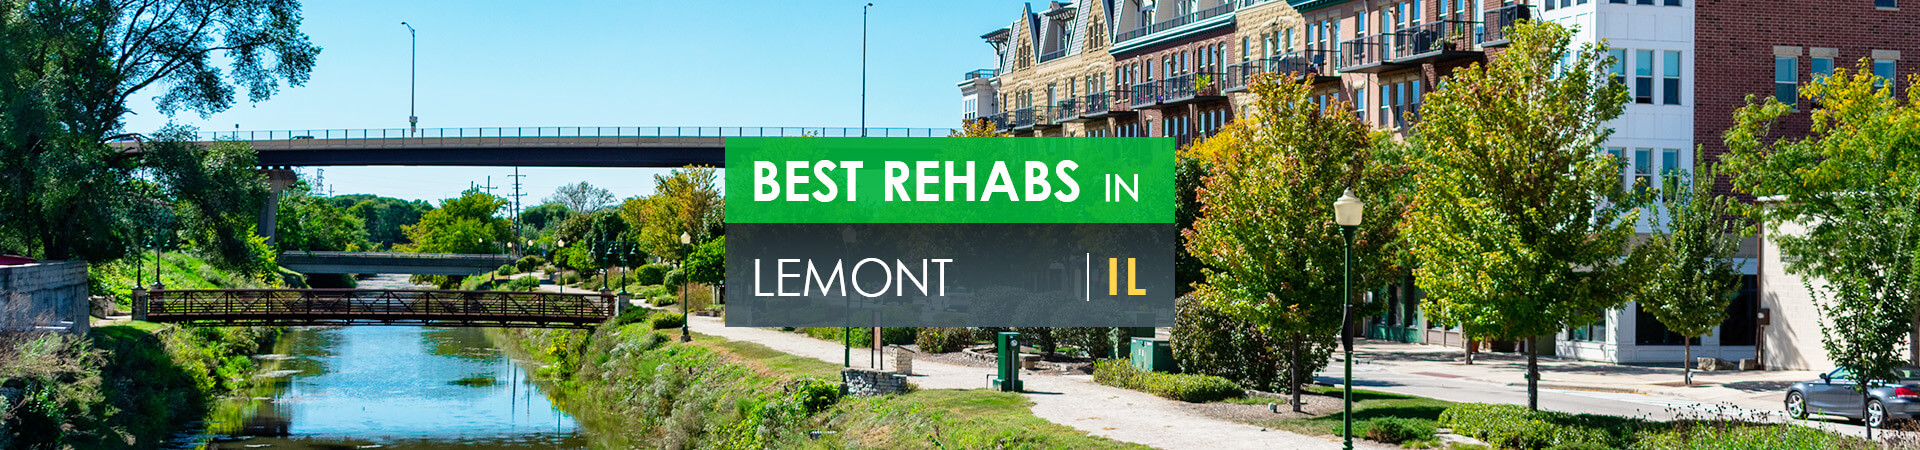 Best rehabs in Lemont, IL